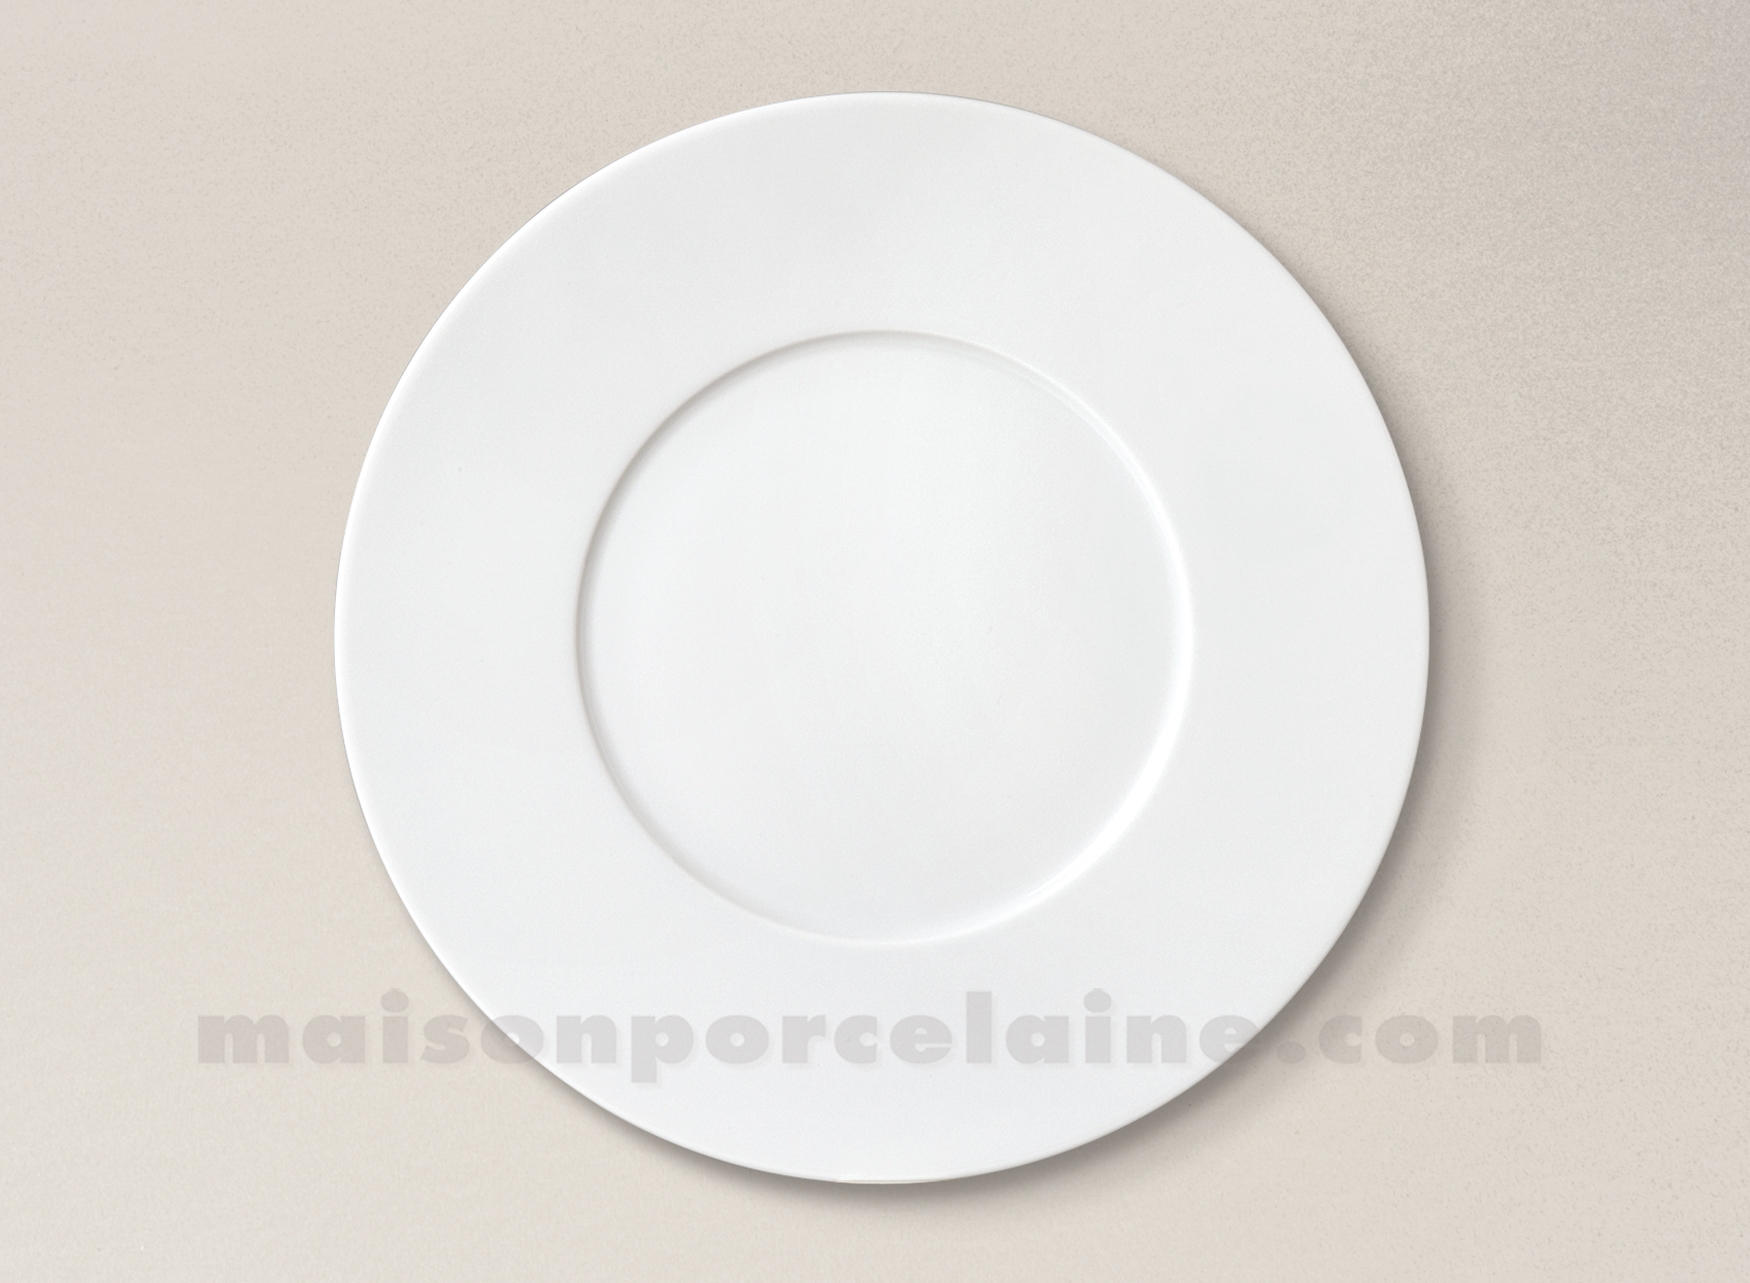 https://www.maisonporcelaine.com/b/assiette-plate-porcelaine-blanche-zen-d27__41112.jpg